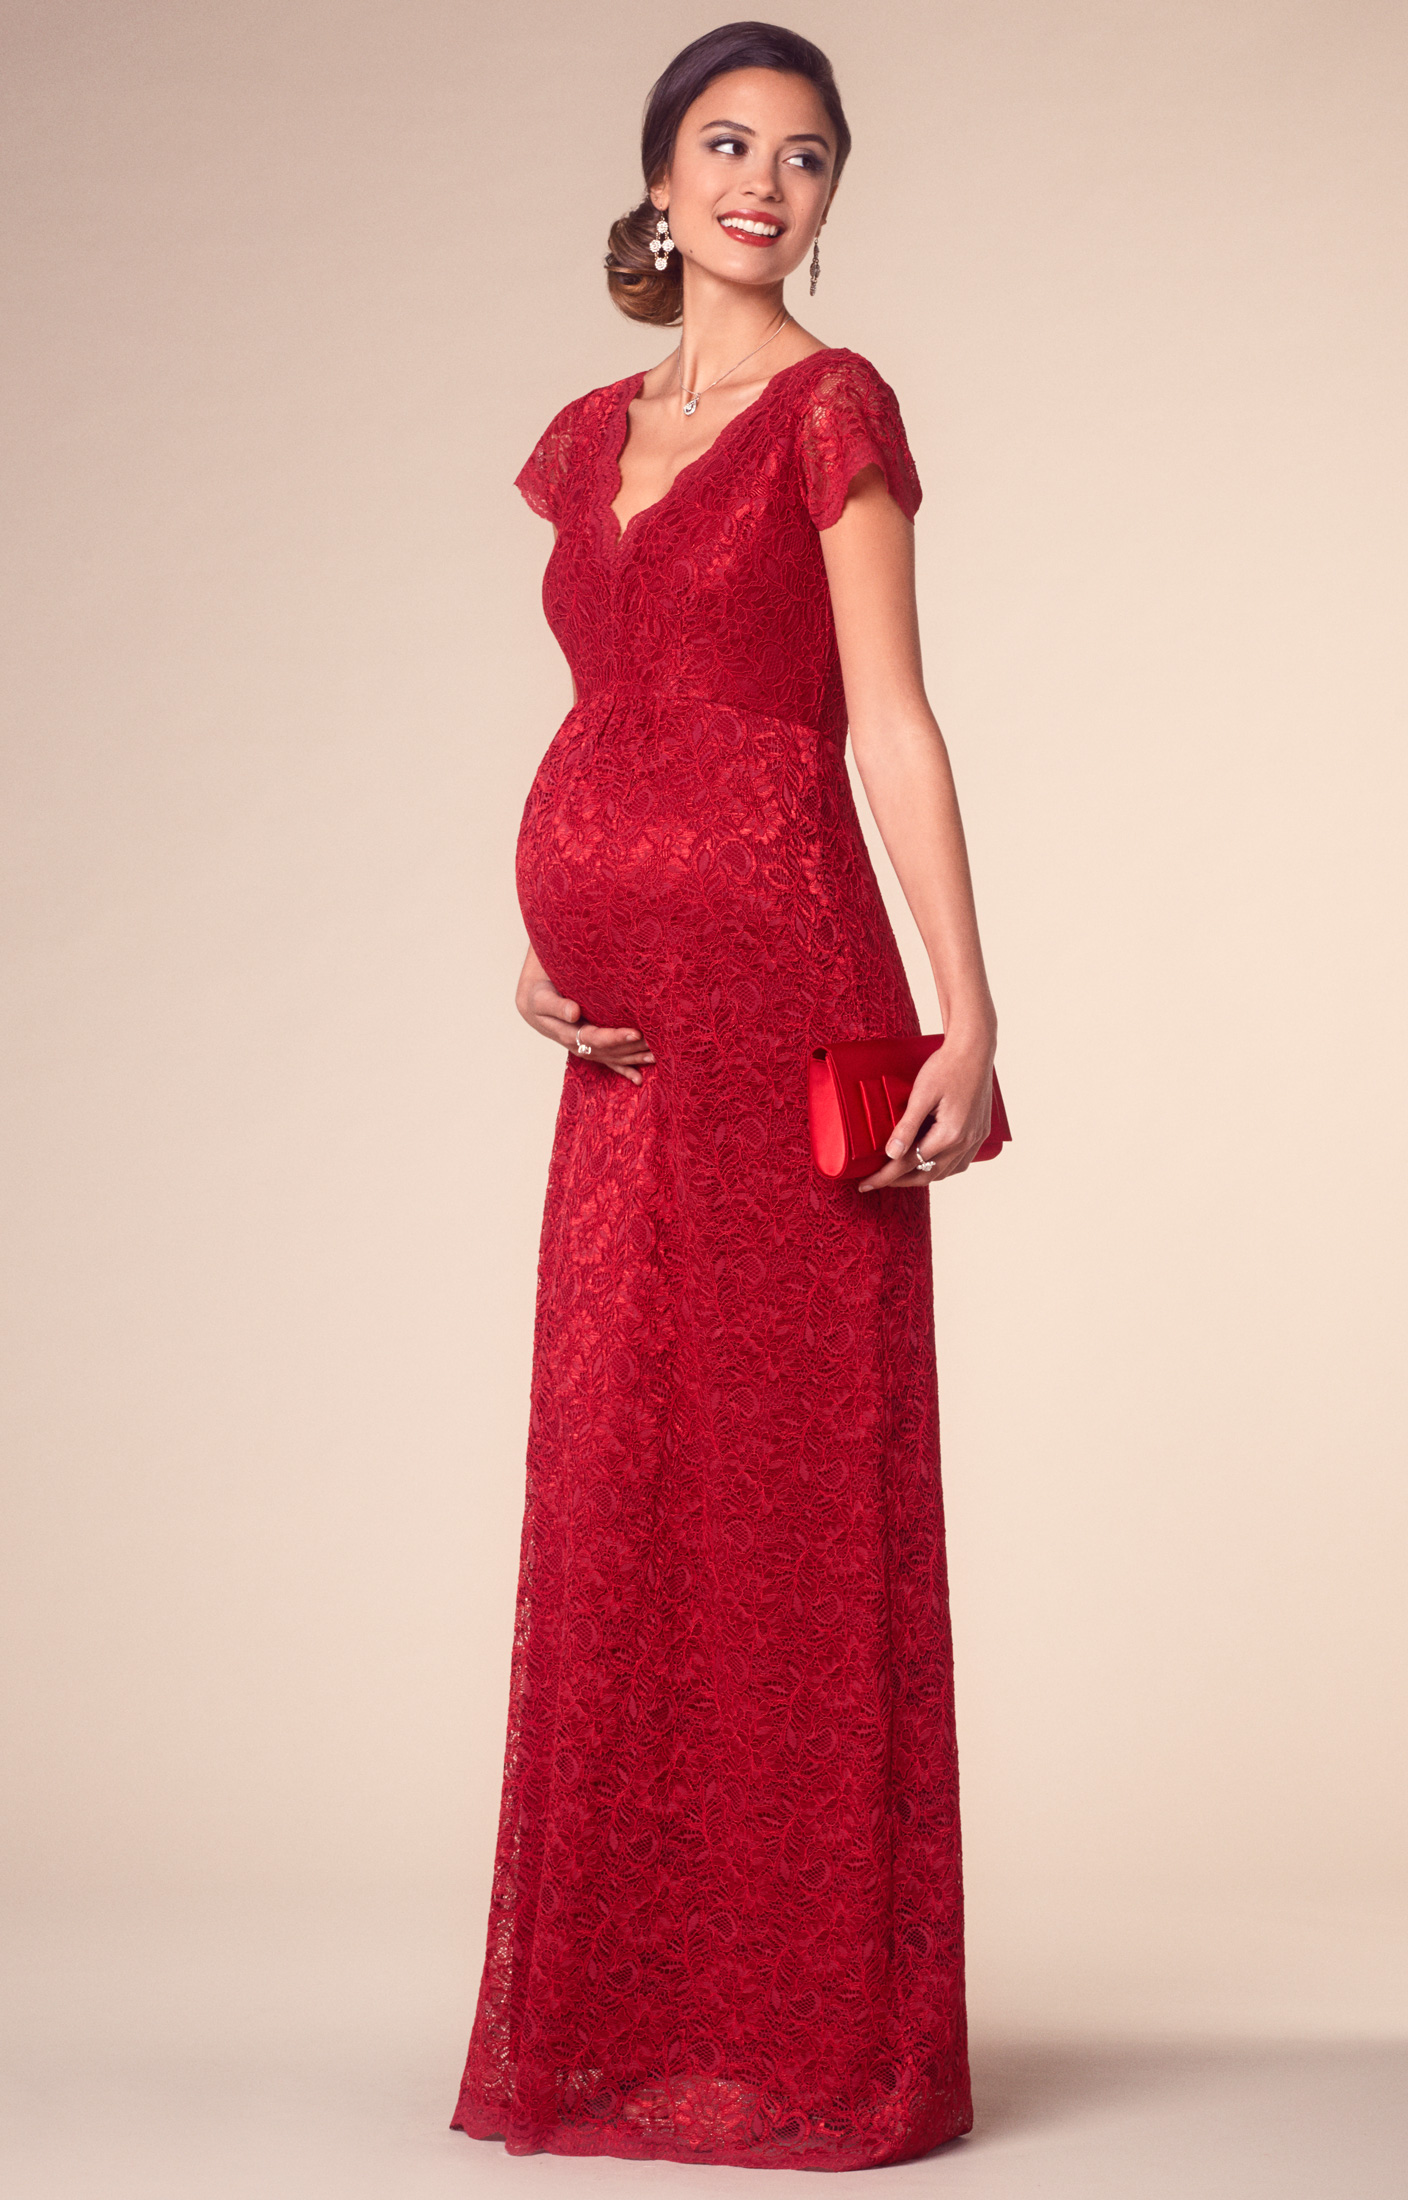 Laura Gravid Lace Gown Long Scarlet från Tiffany Rose